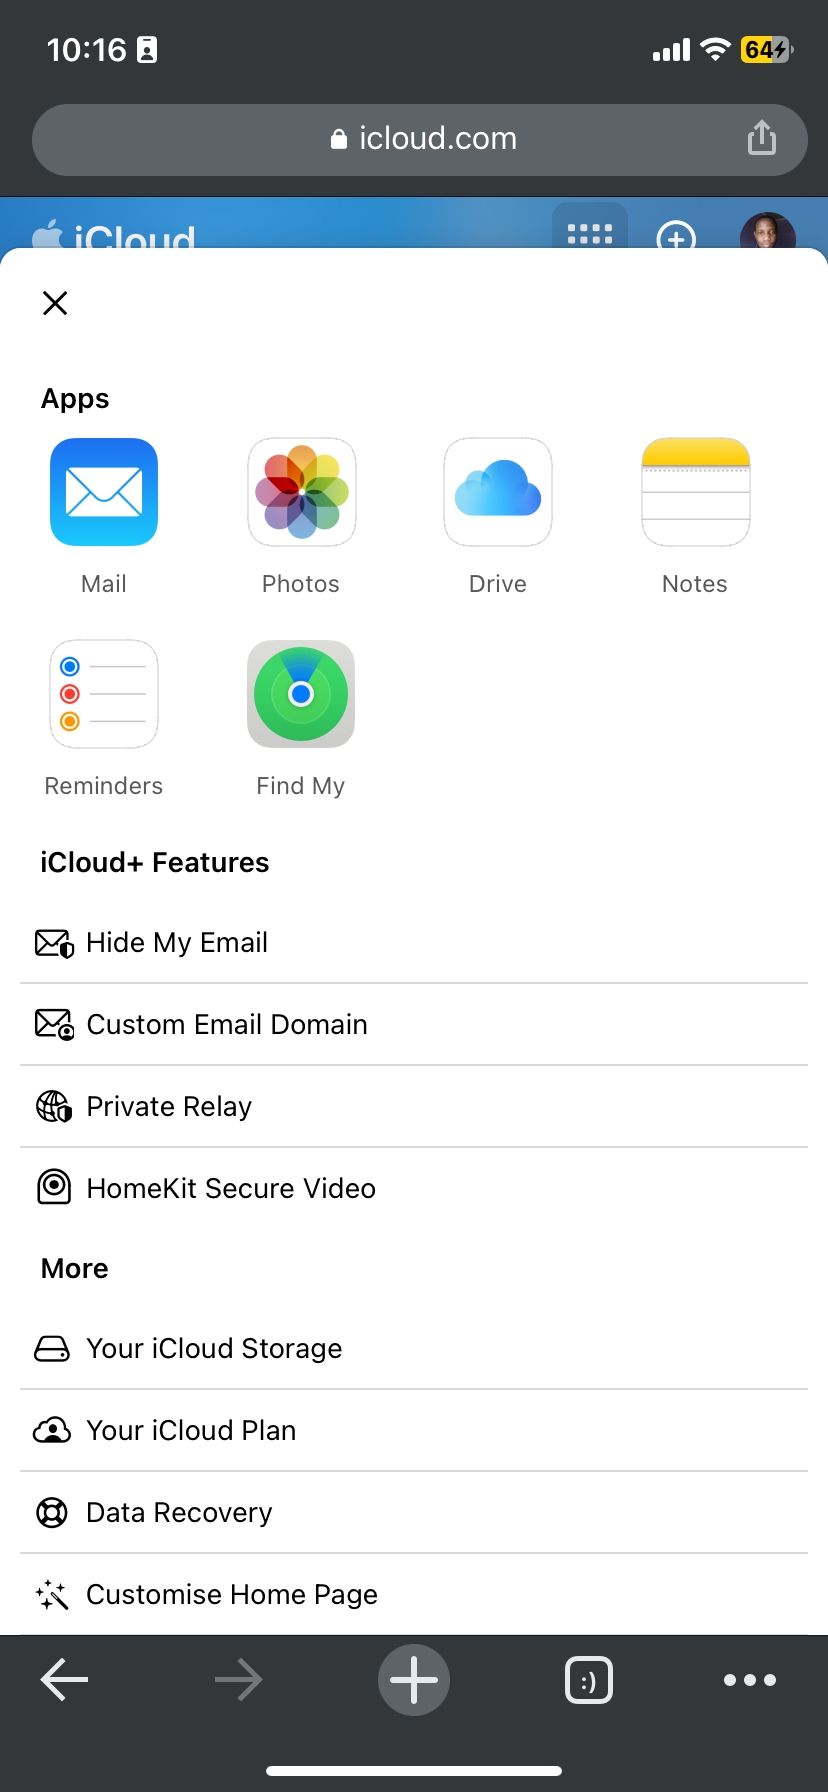 iCloud.com menu on mobile